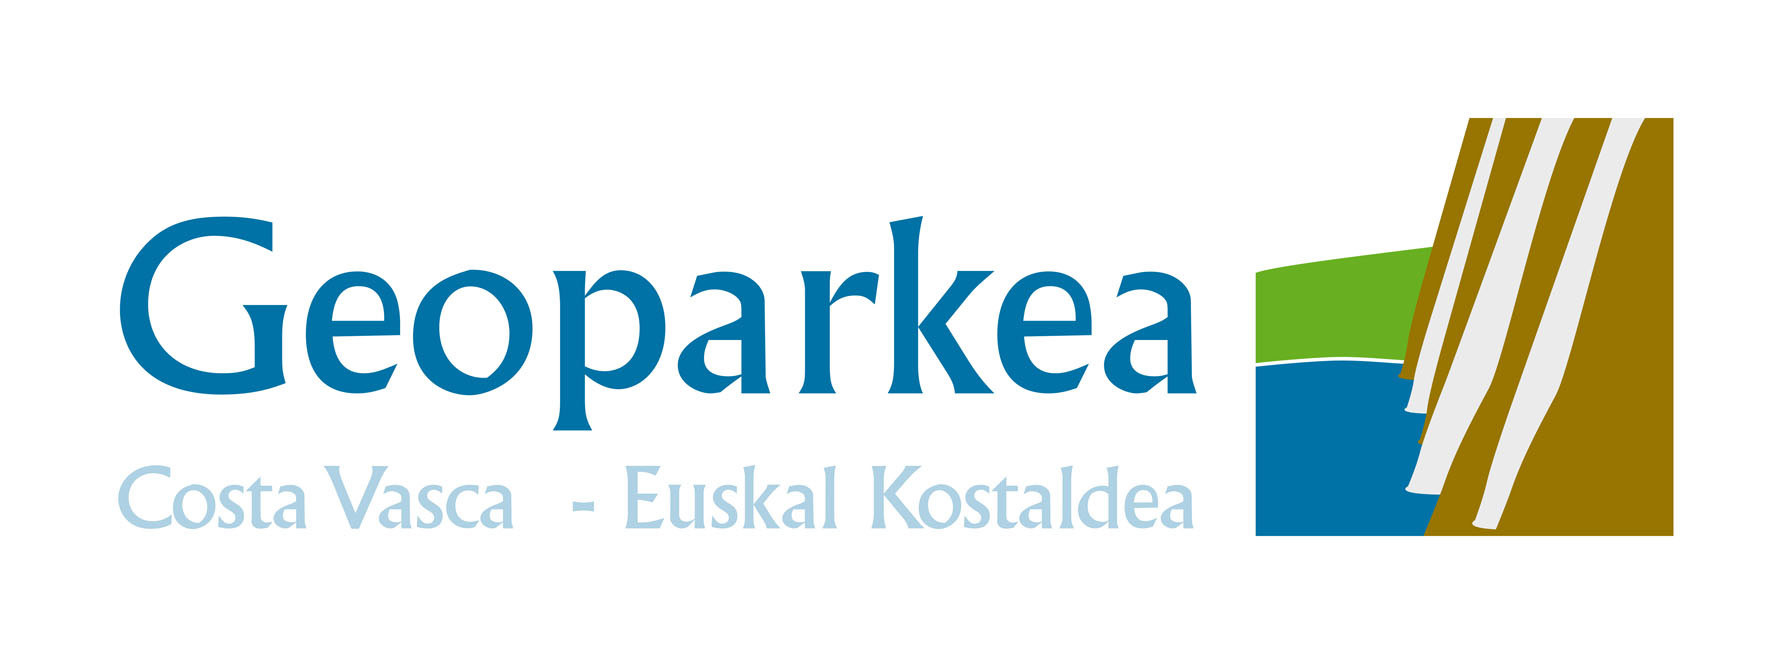 Geoparkea logo